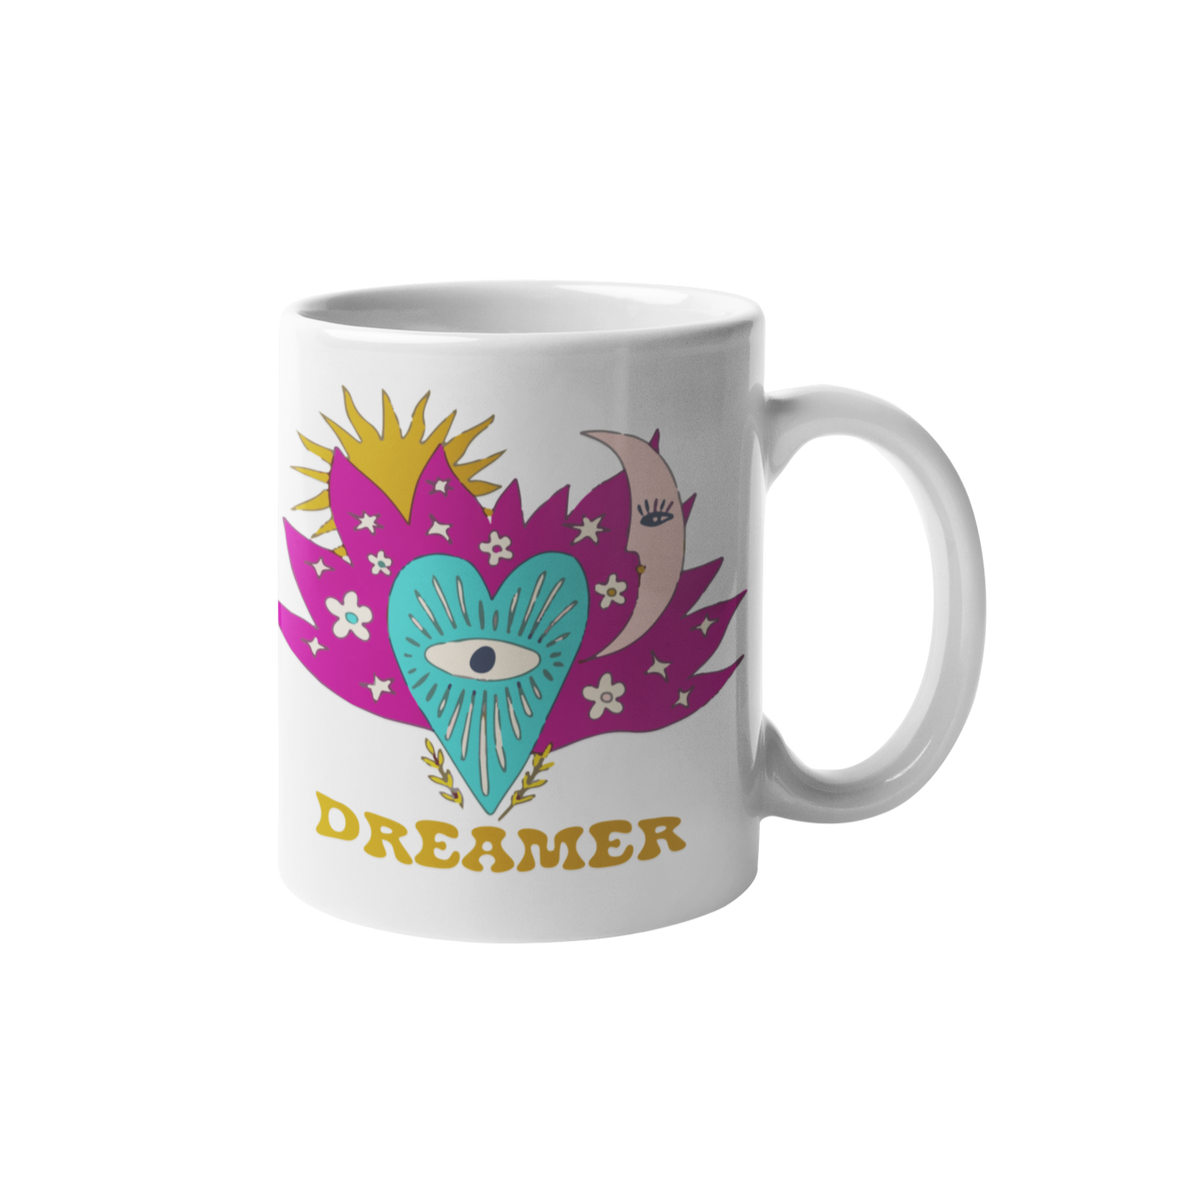 Dreamer - Mug